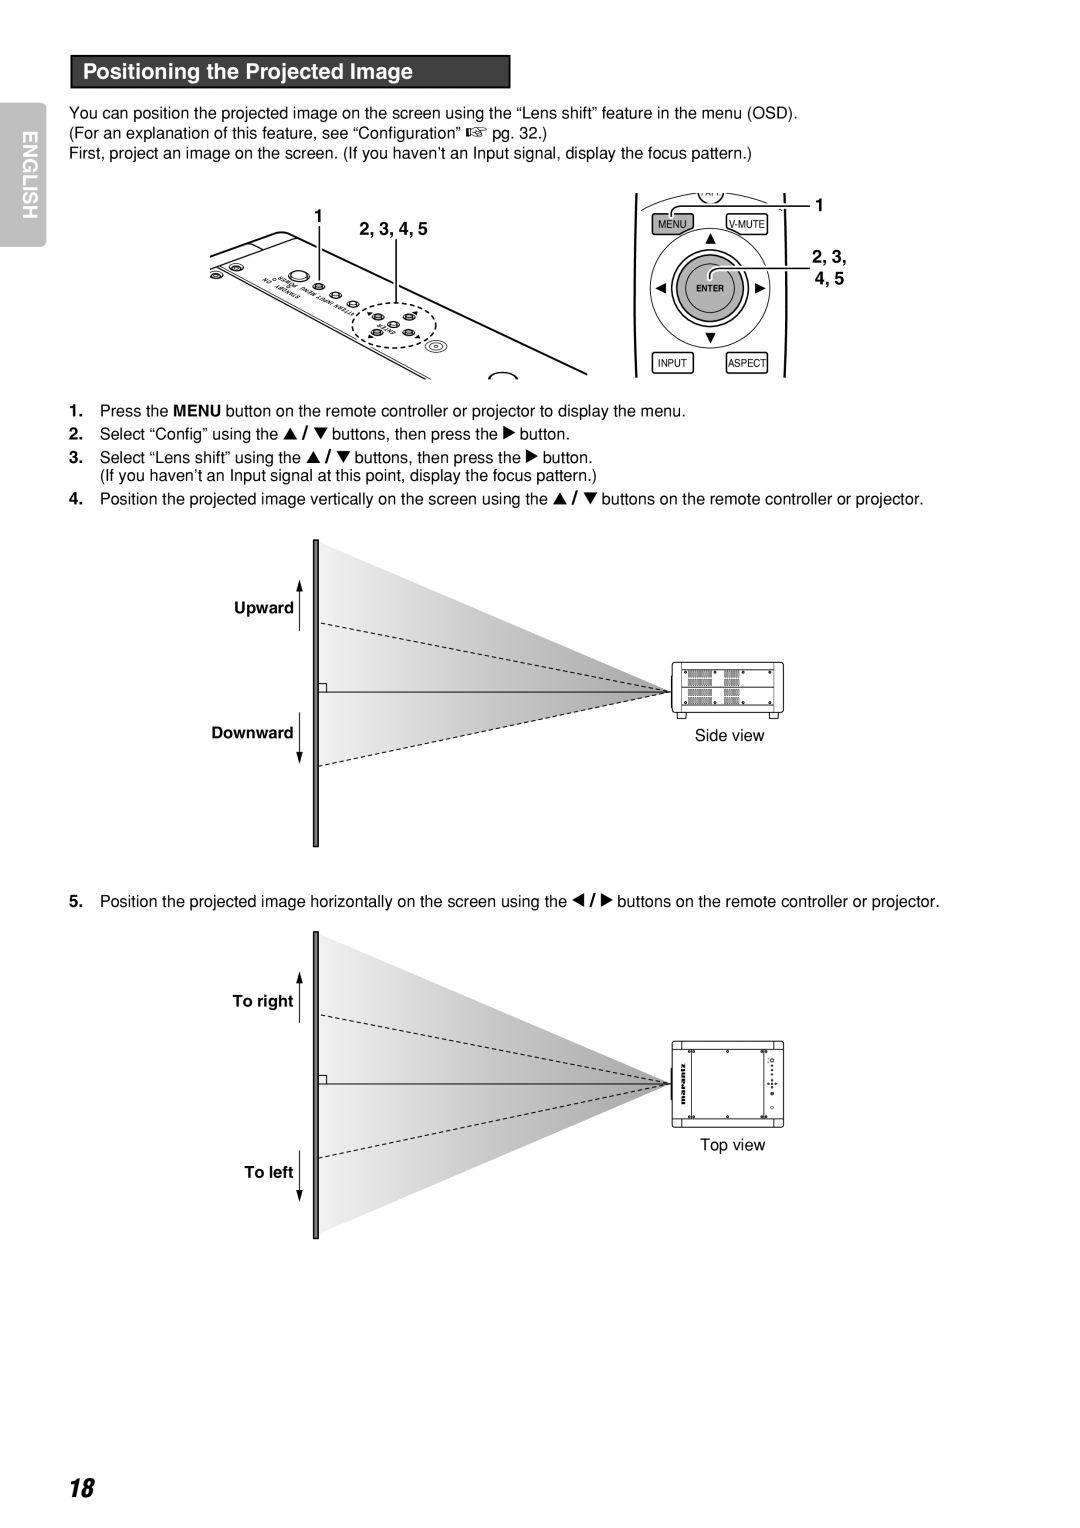 Marantz Model VP-10S1 manual Positioning the Projected Image, 2, 3, 4 